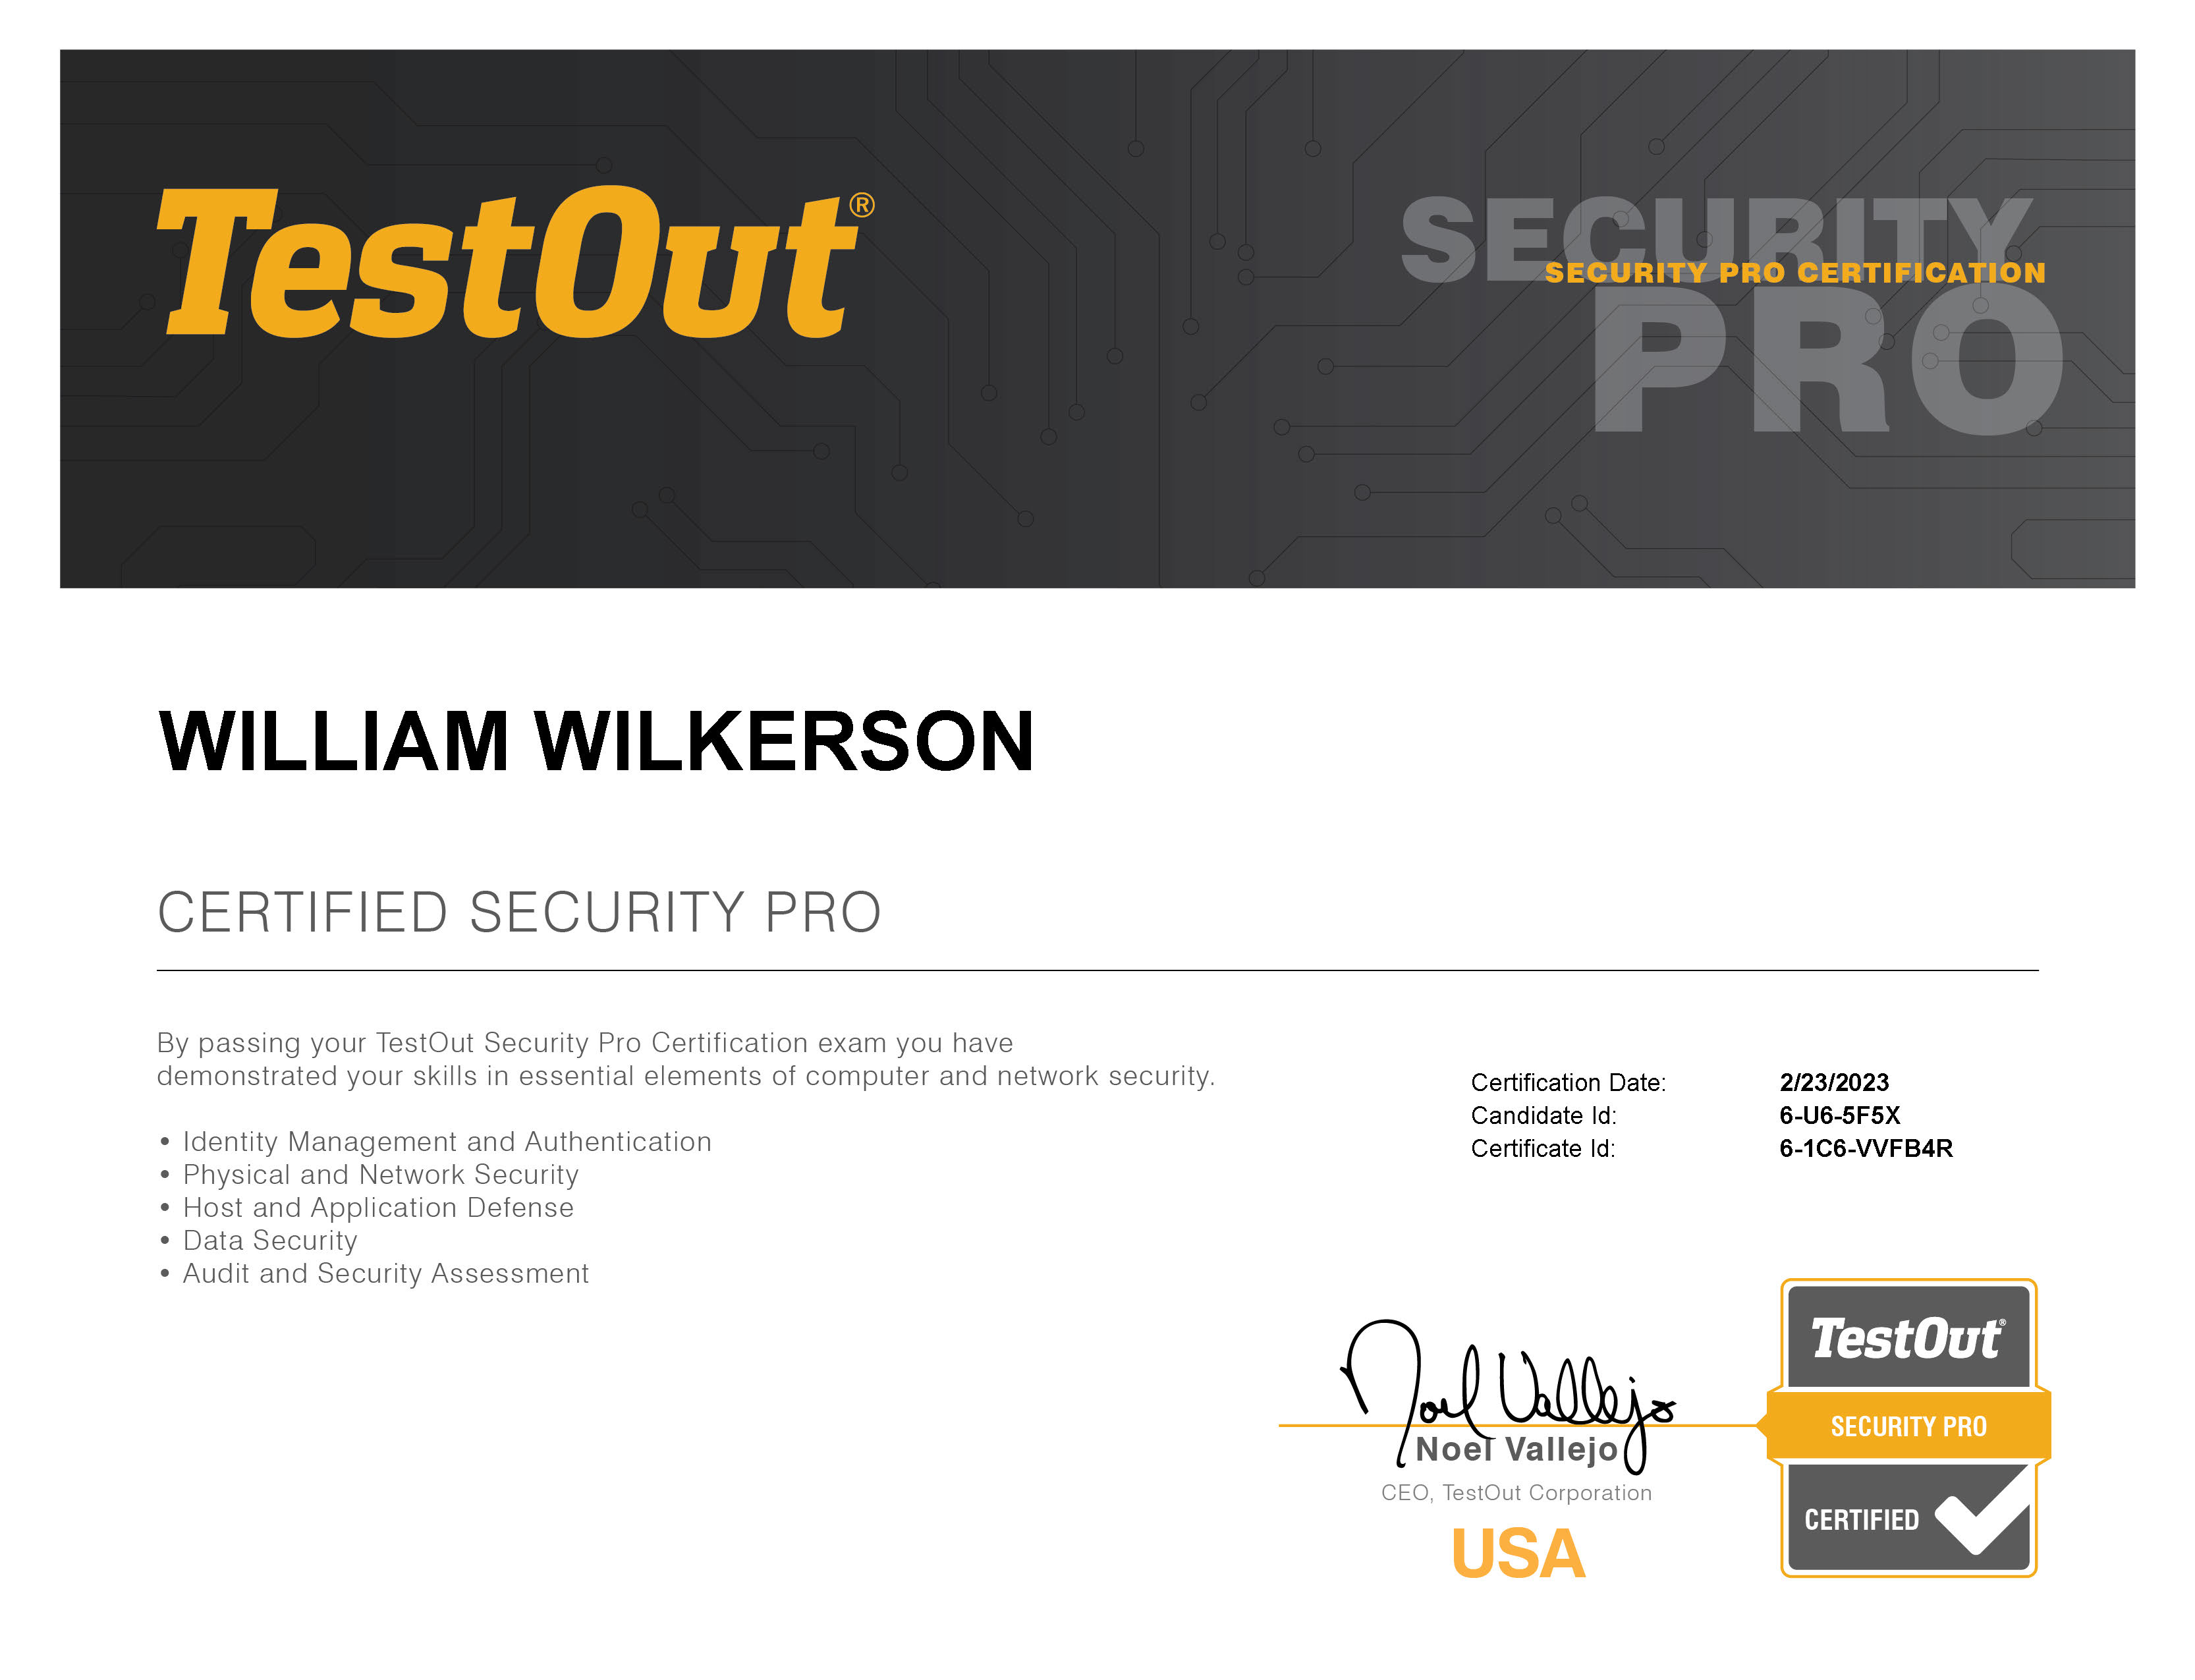 Certified Security Pro certificate image